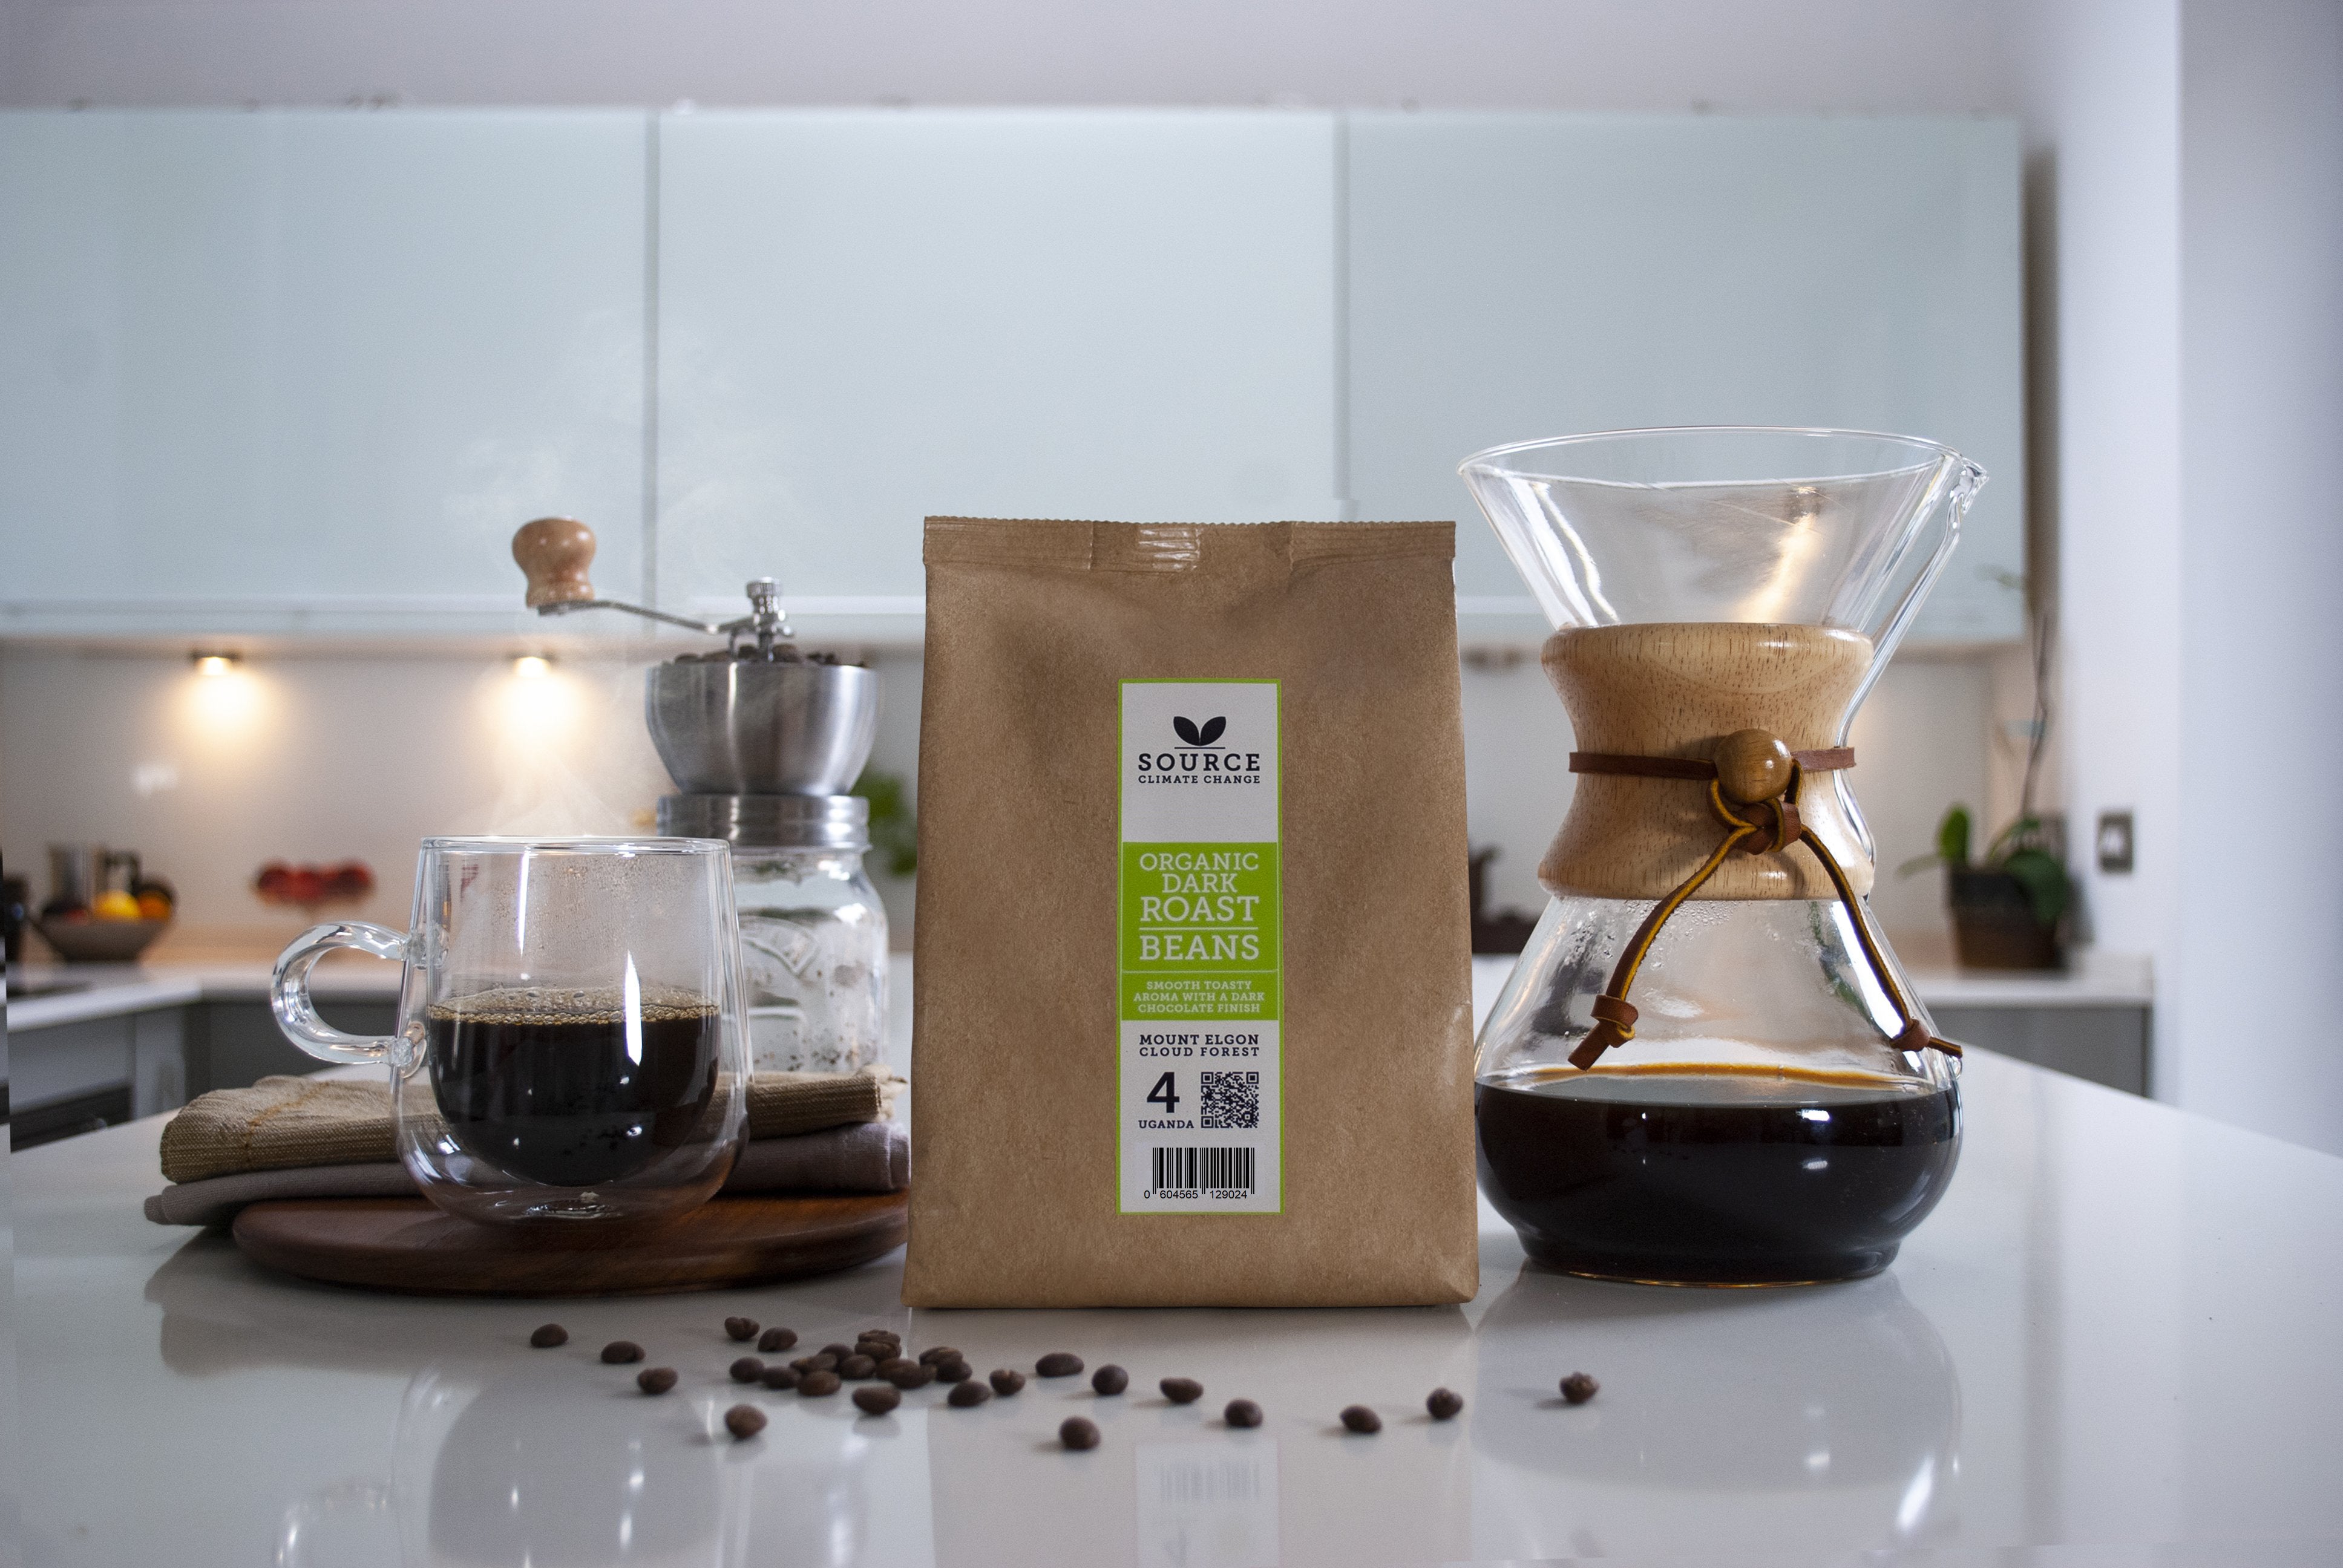 Organic Mount Elgon Cloud Forest Coffee - Uganda Roast & Ground Subscription